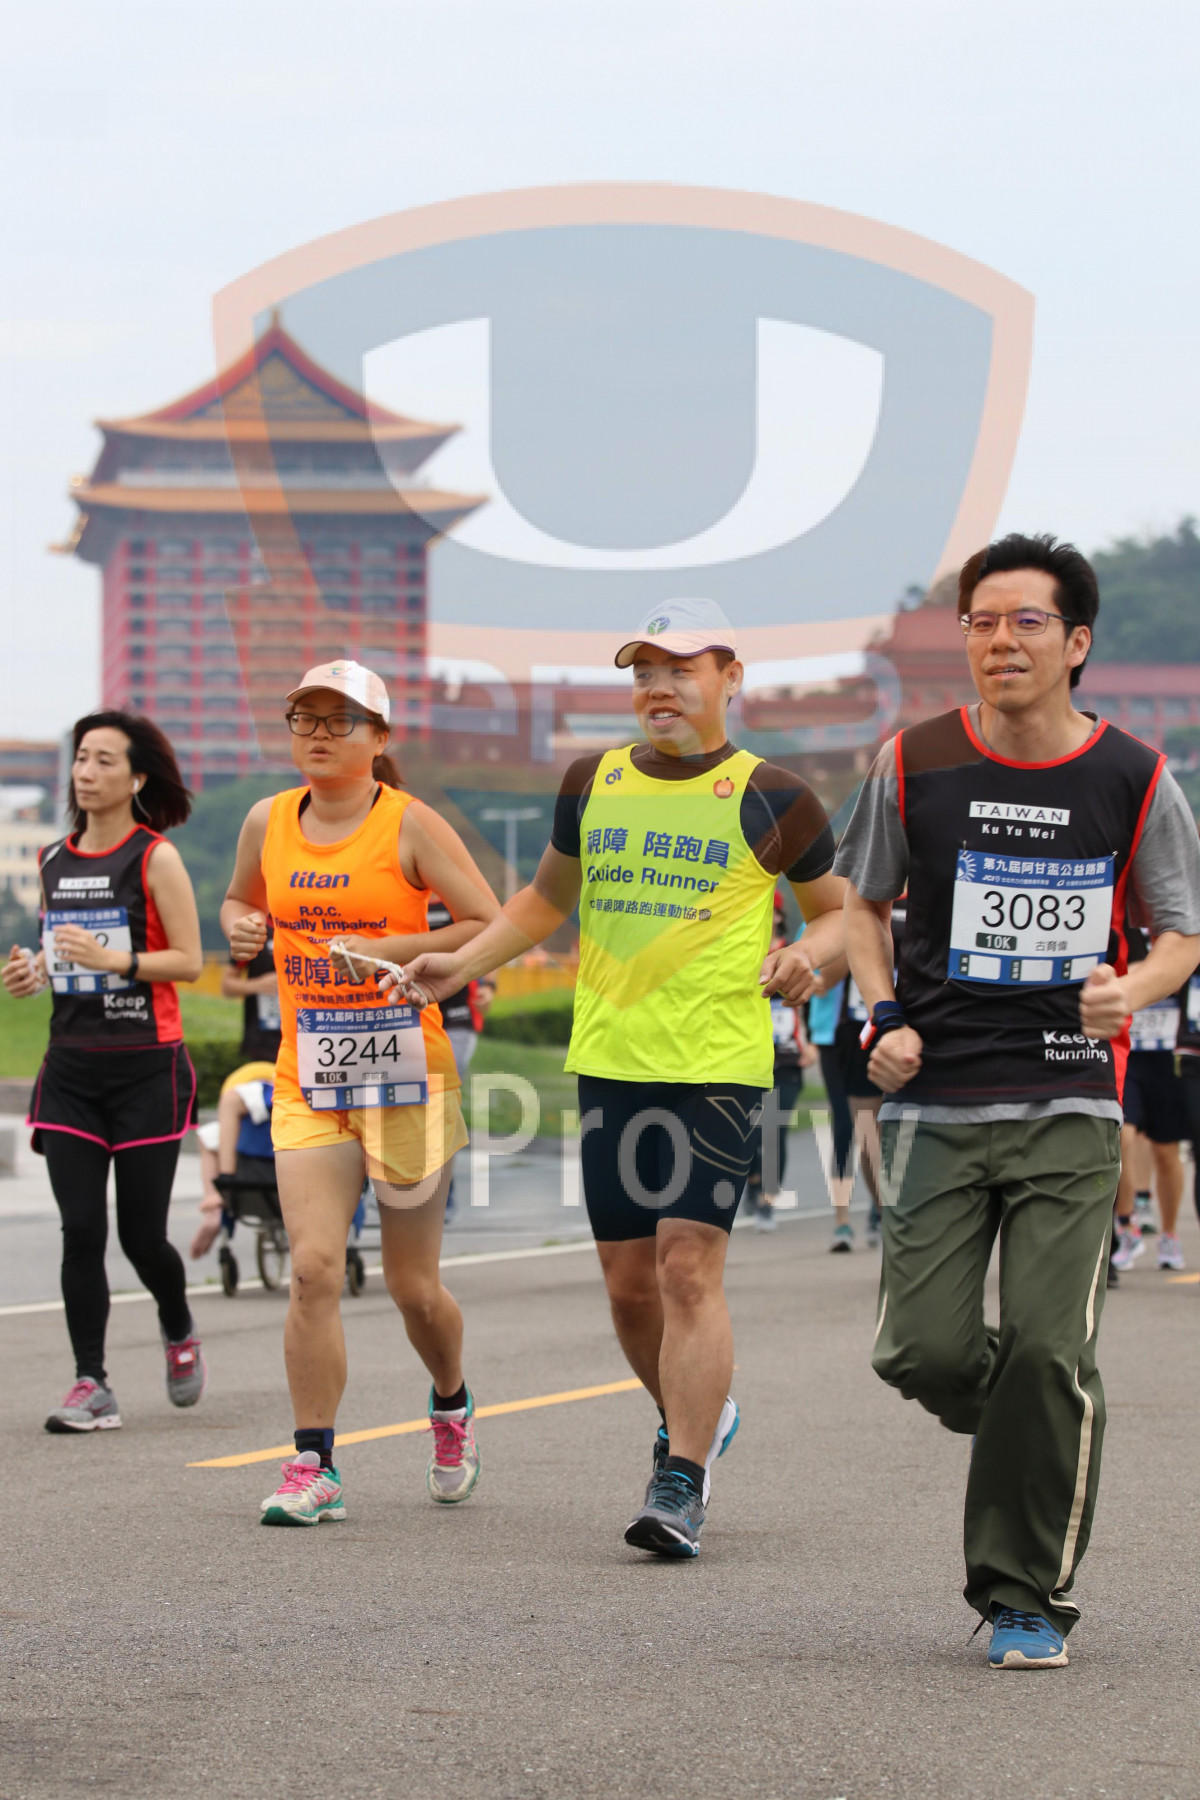 TAIWAN,,ide Runner,c,,3083,itan,RLO.C.,0K,,ASP,Running,3244|2018 第九屆阿甘盃公益路跑|Soryu Asuka Langley